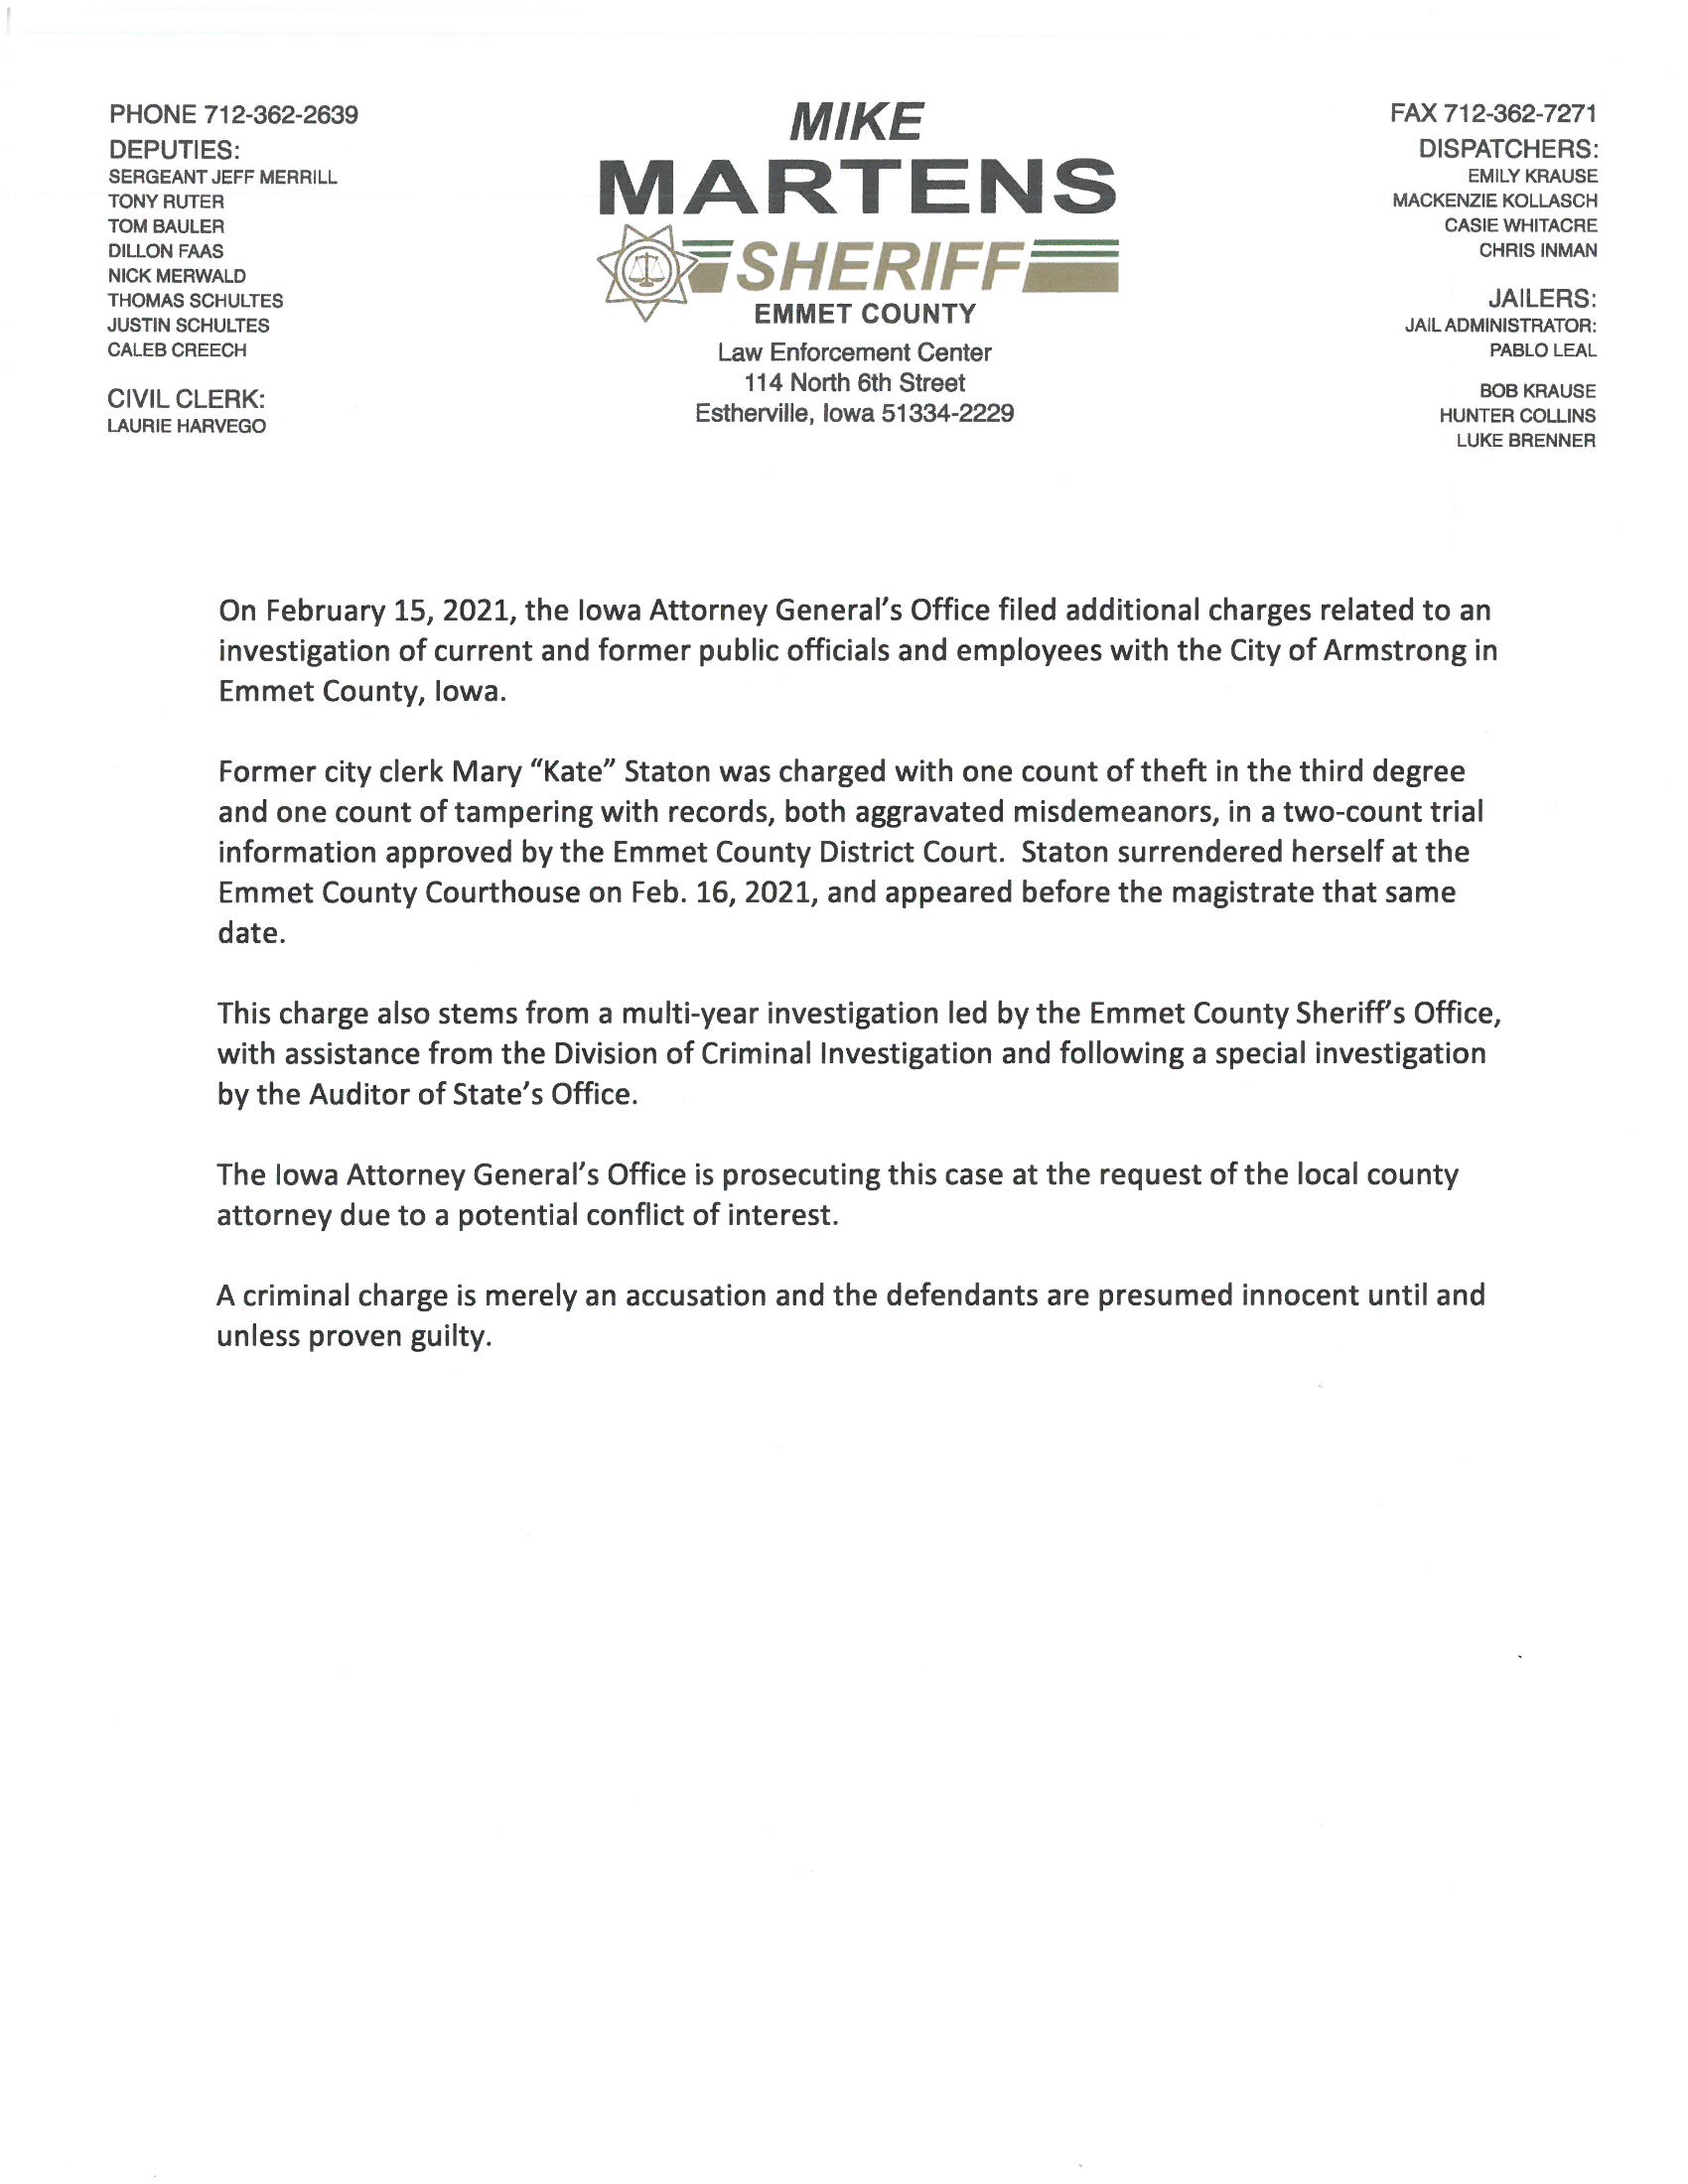 Link to Emmet County press release